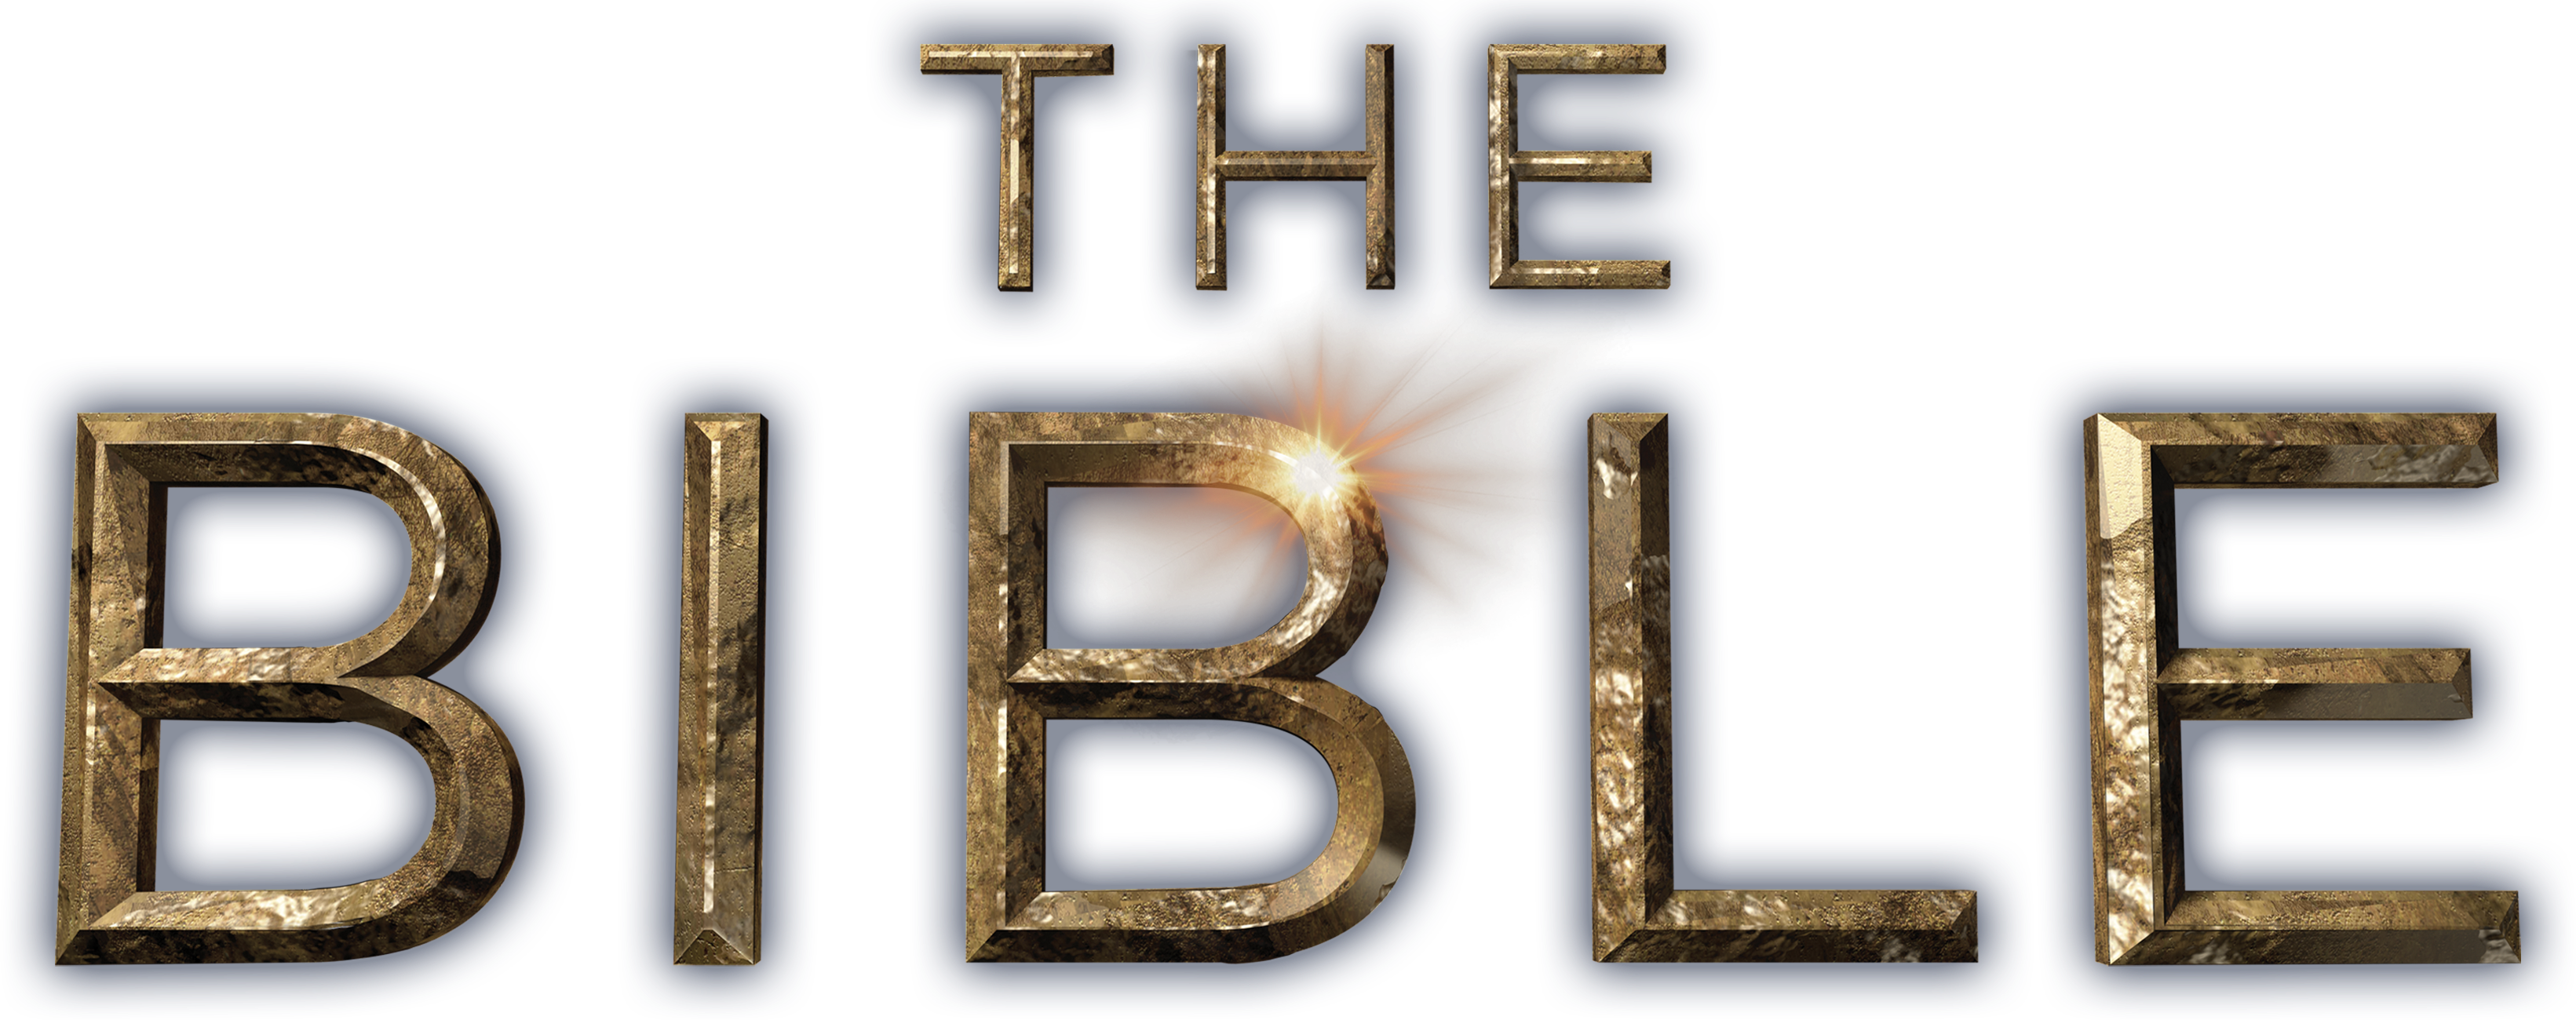 Bible Black Episode 1 English Sub pornographic actresses